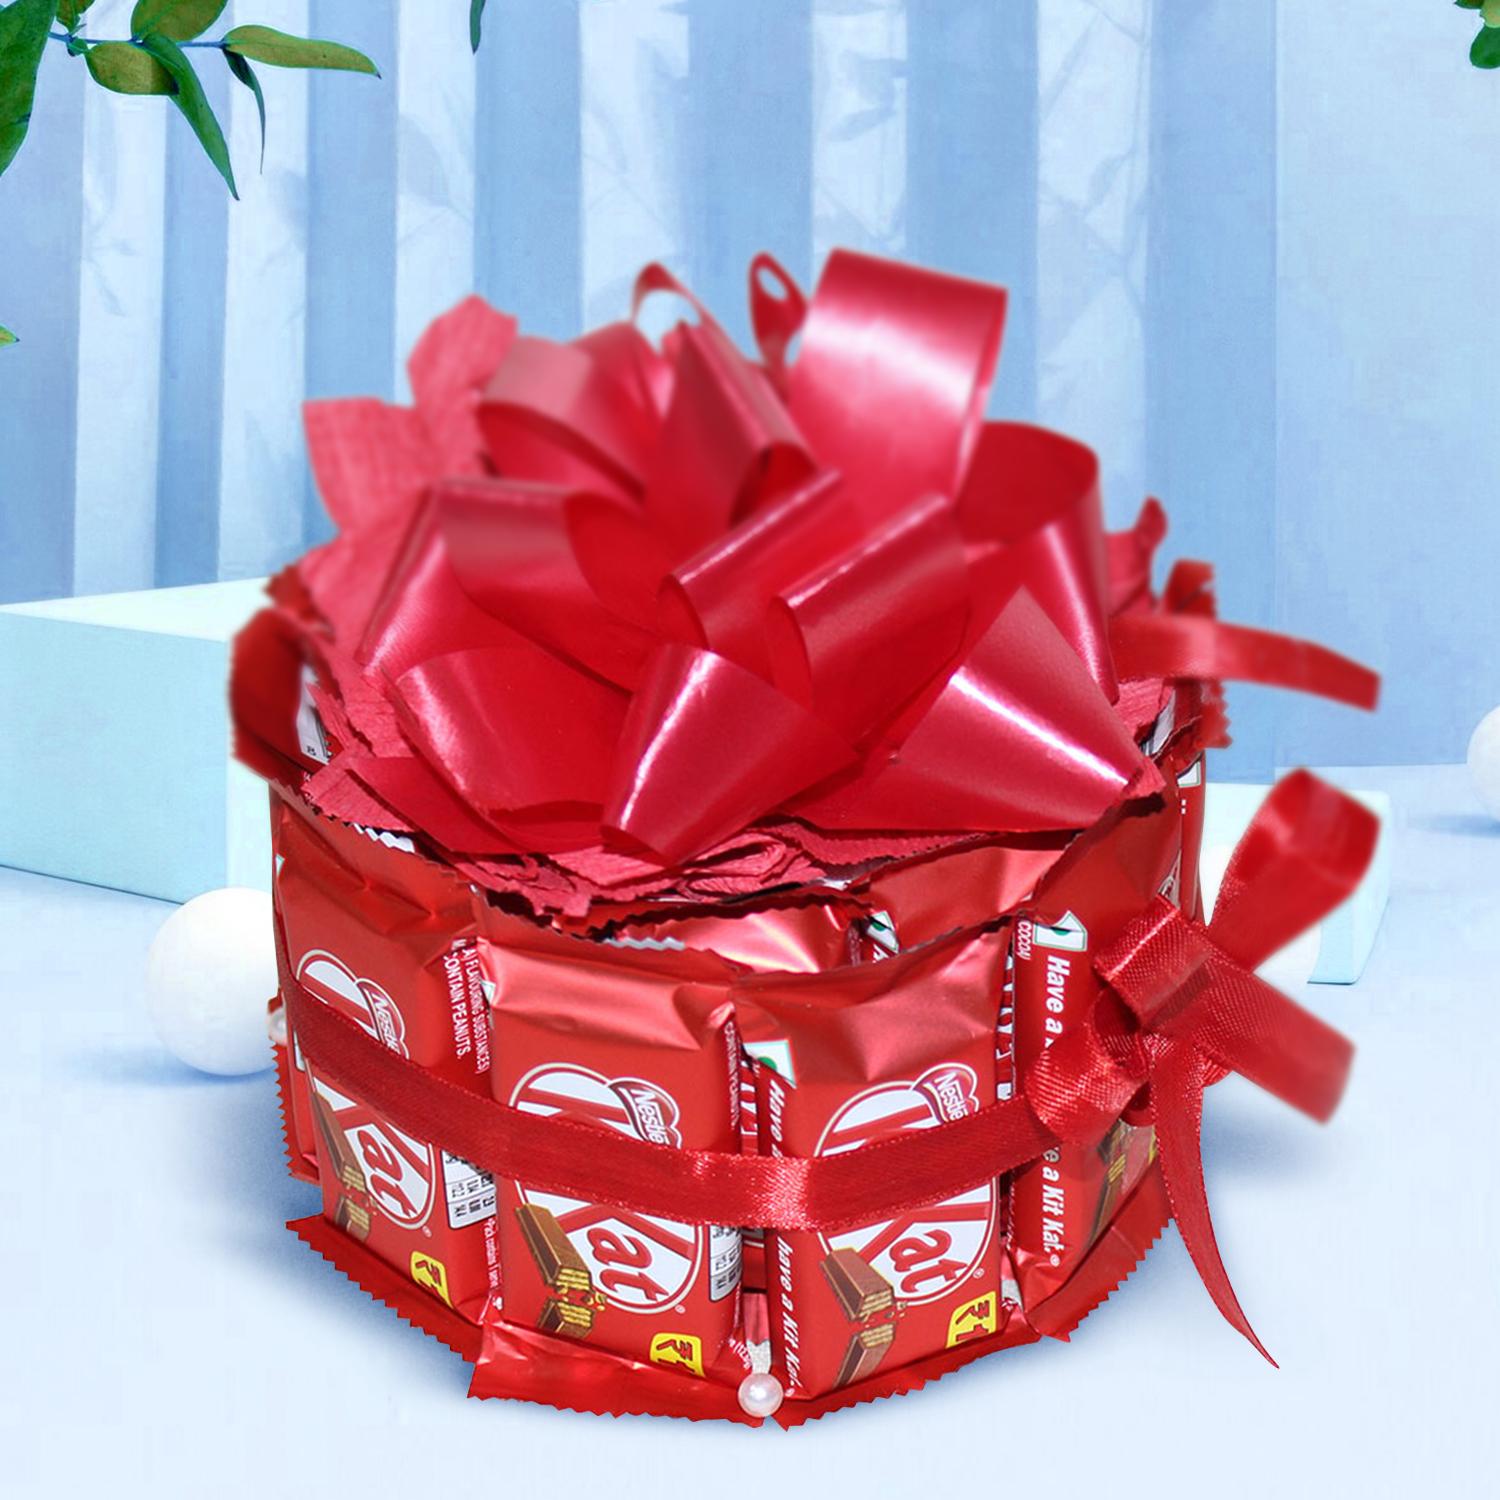 Kitkat Milk Chocolate Easter Egg Gift Box 173g | Woolworths